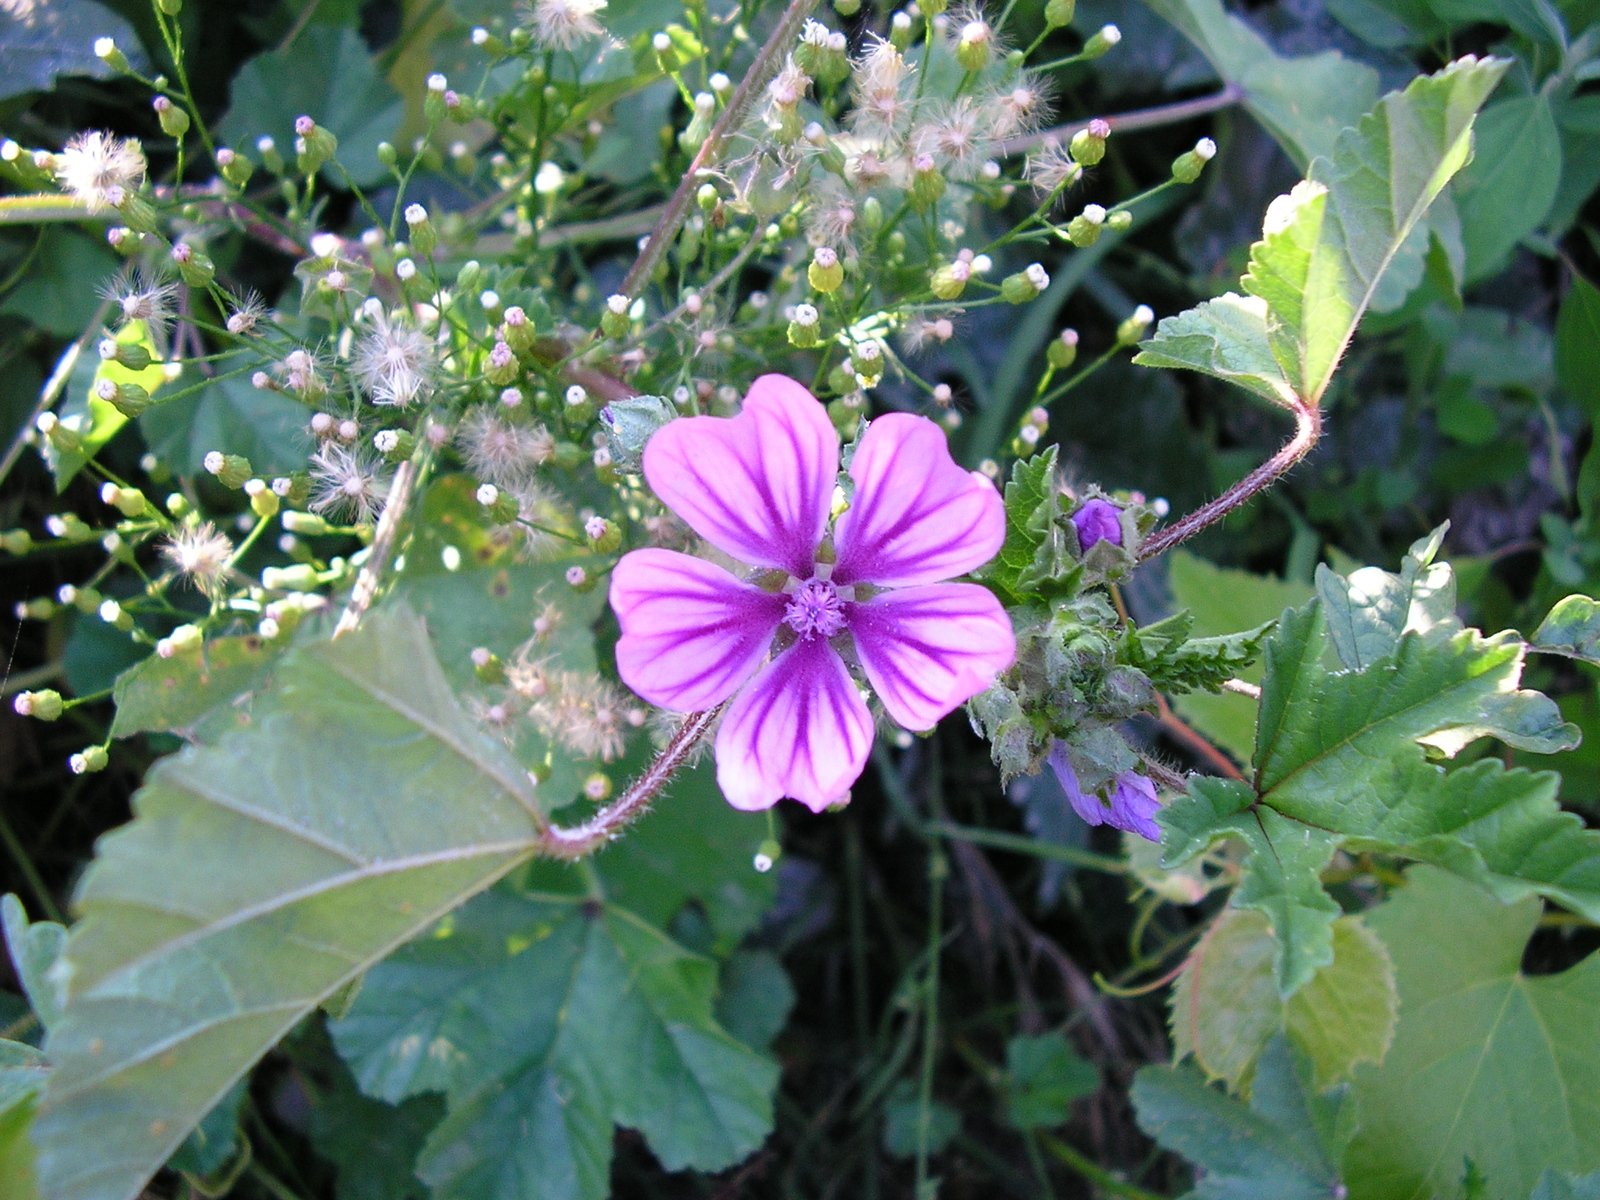 a purple flower is blooming near green leaves